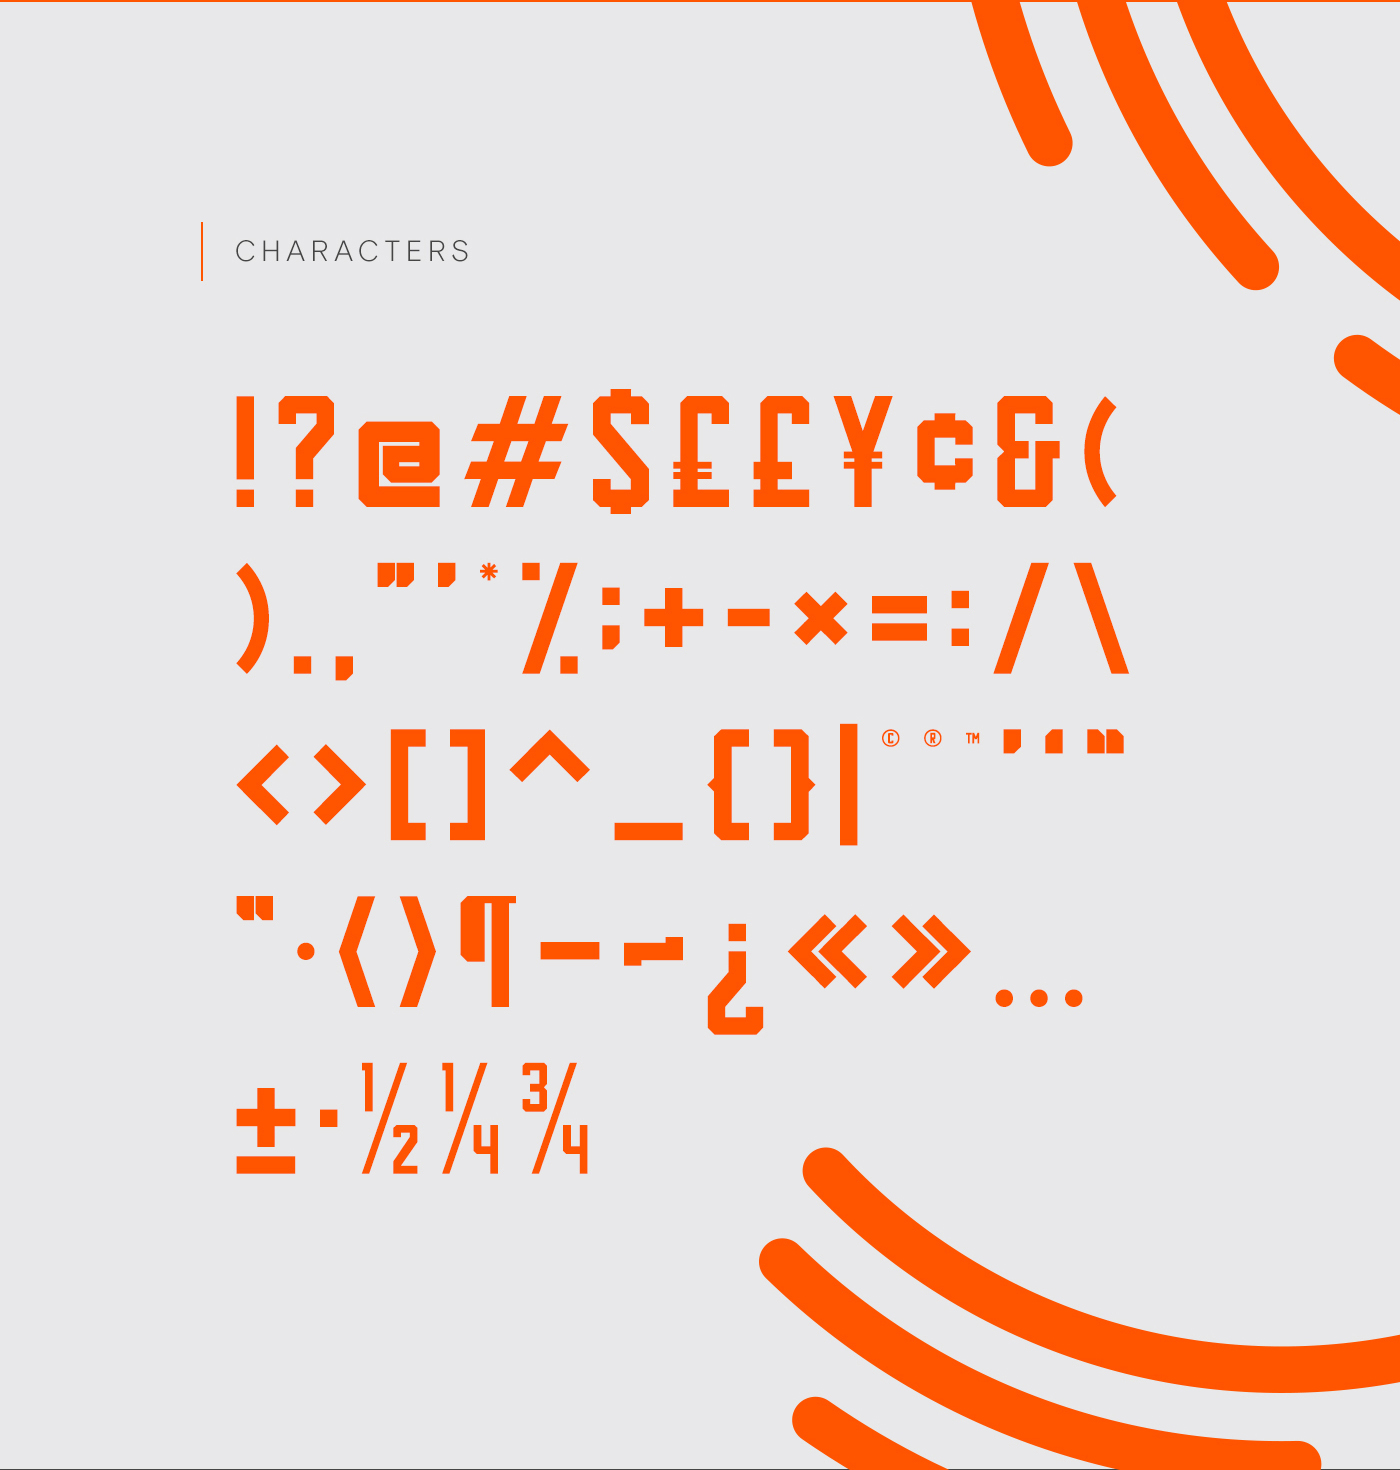 Hal Free Typeface - sans-serif